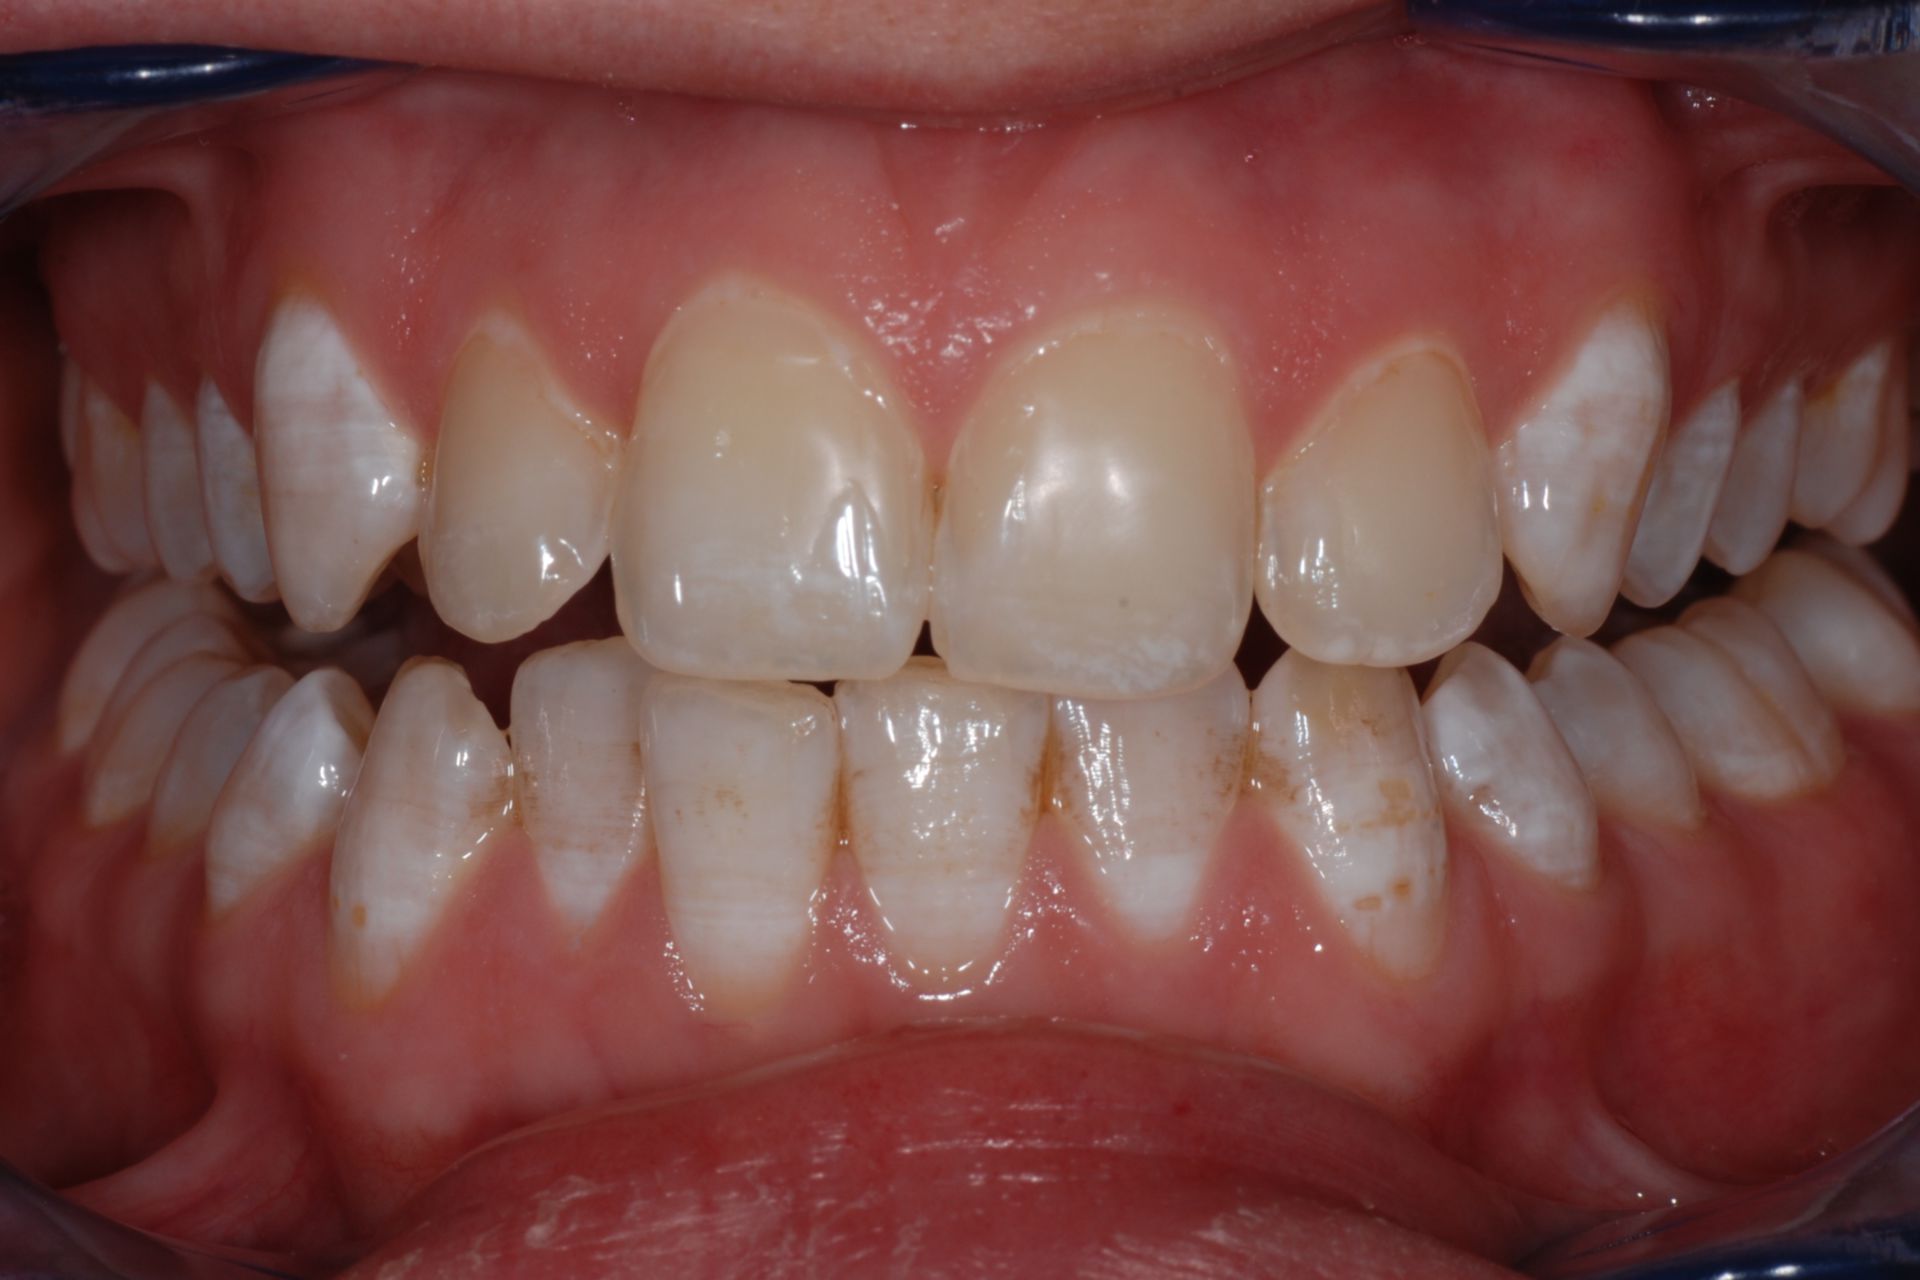 Dental fluorosis